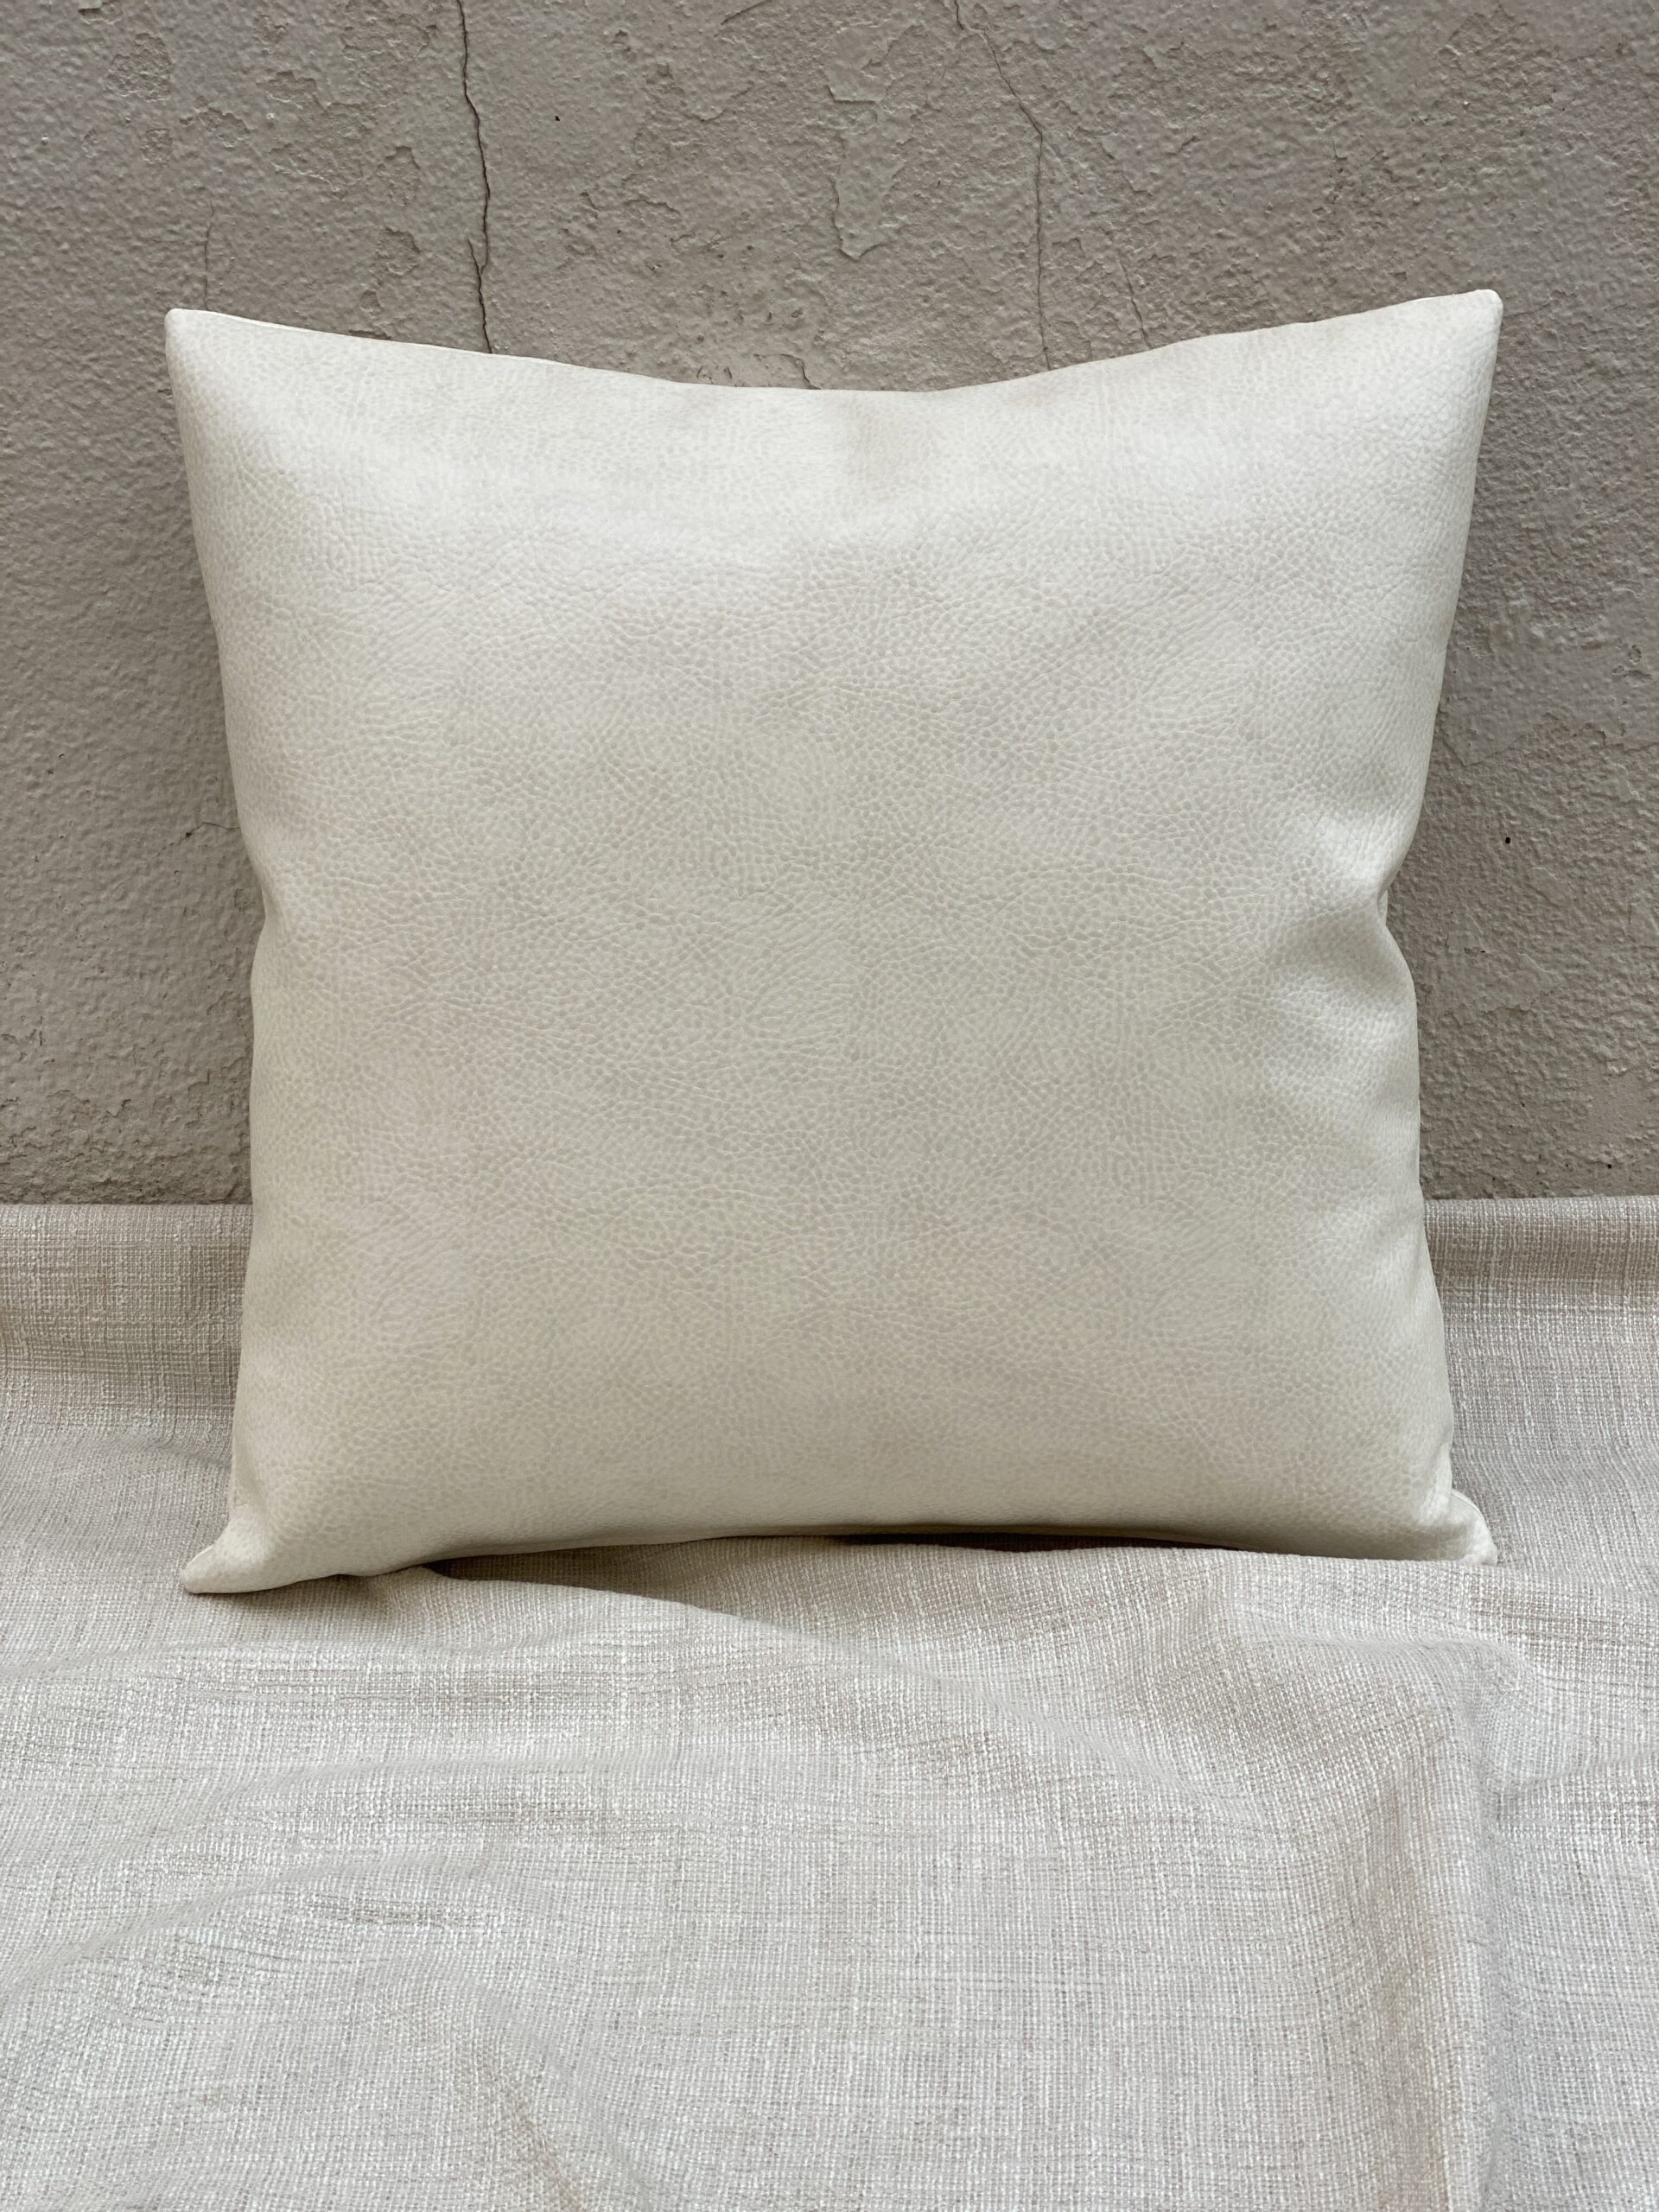 Stout Boscobel Pillows